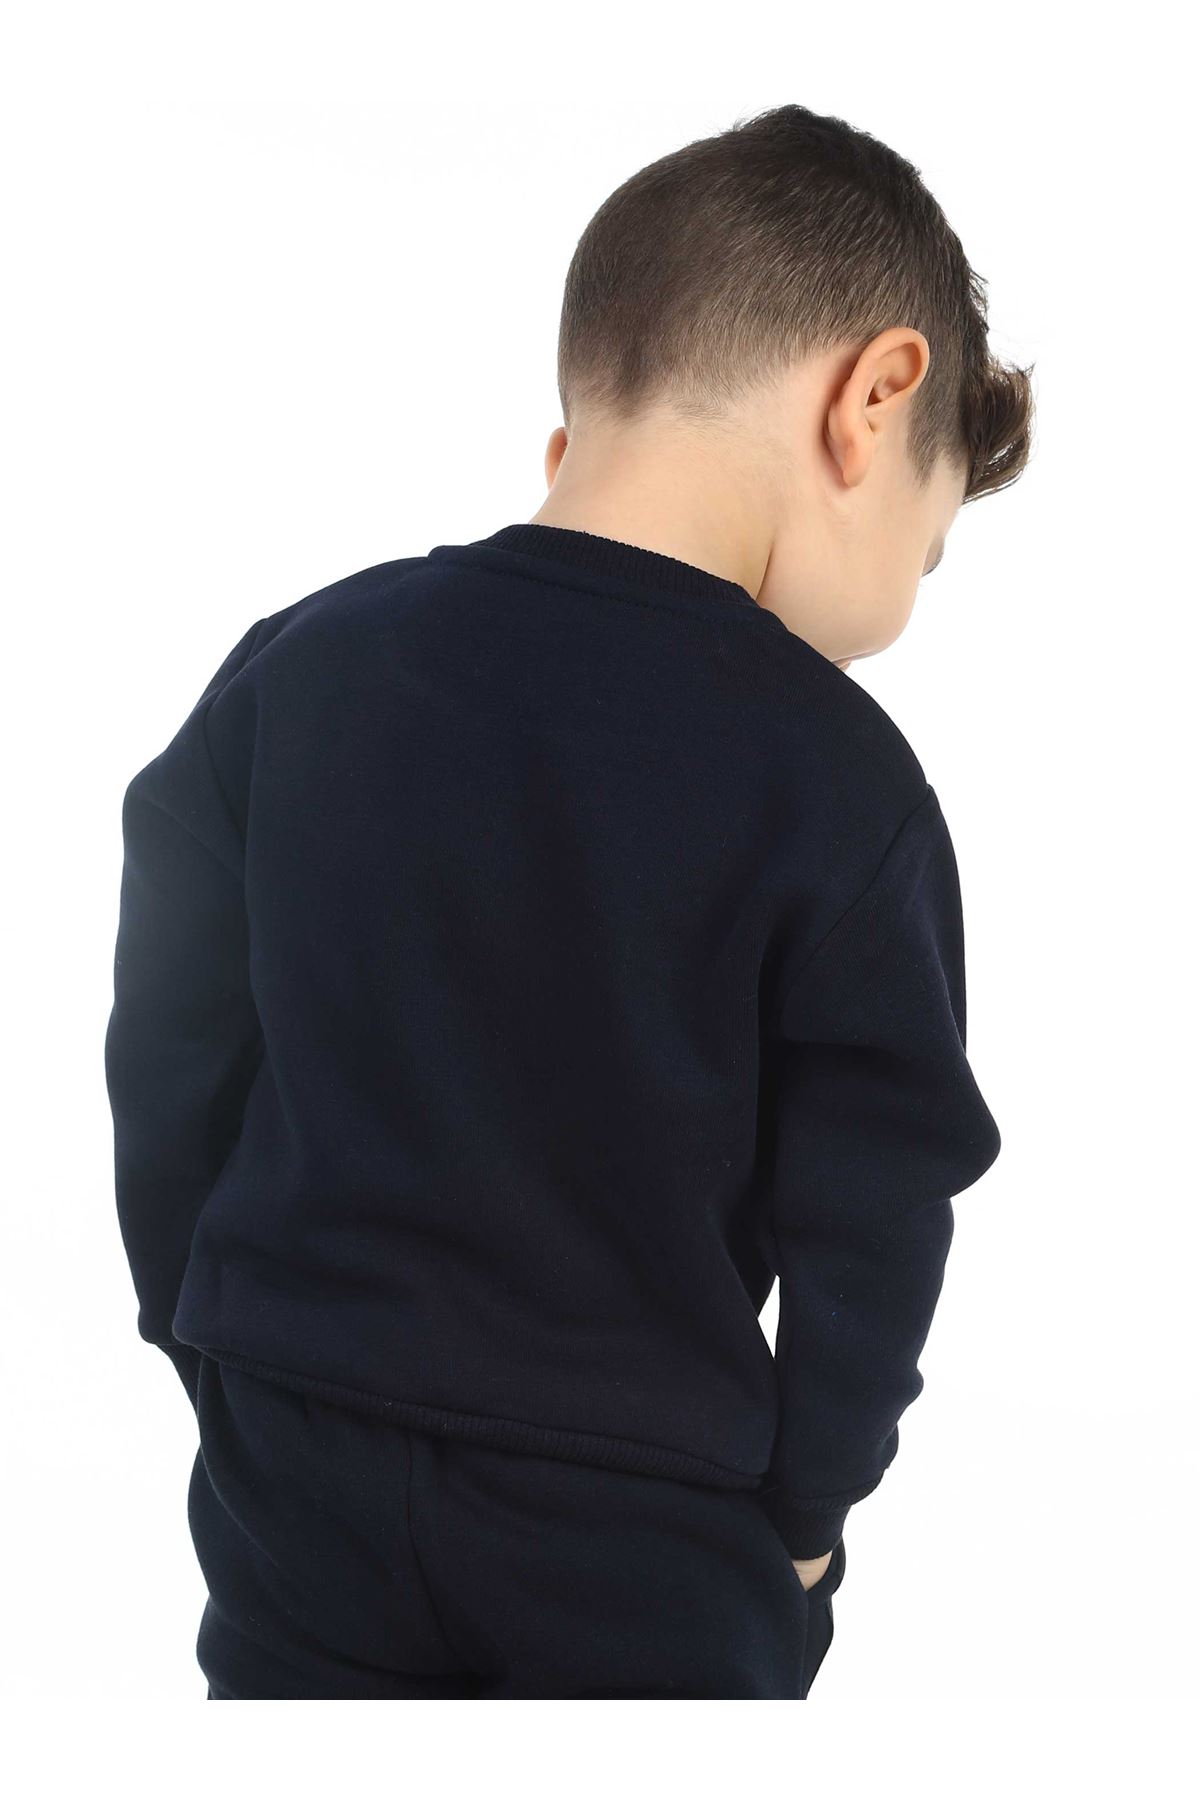 Navy Blue Winter Male Child Sweatshirt